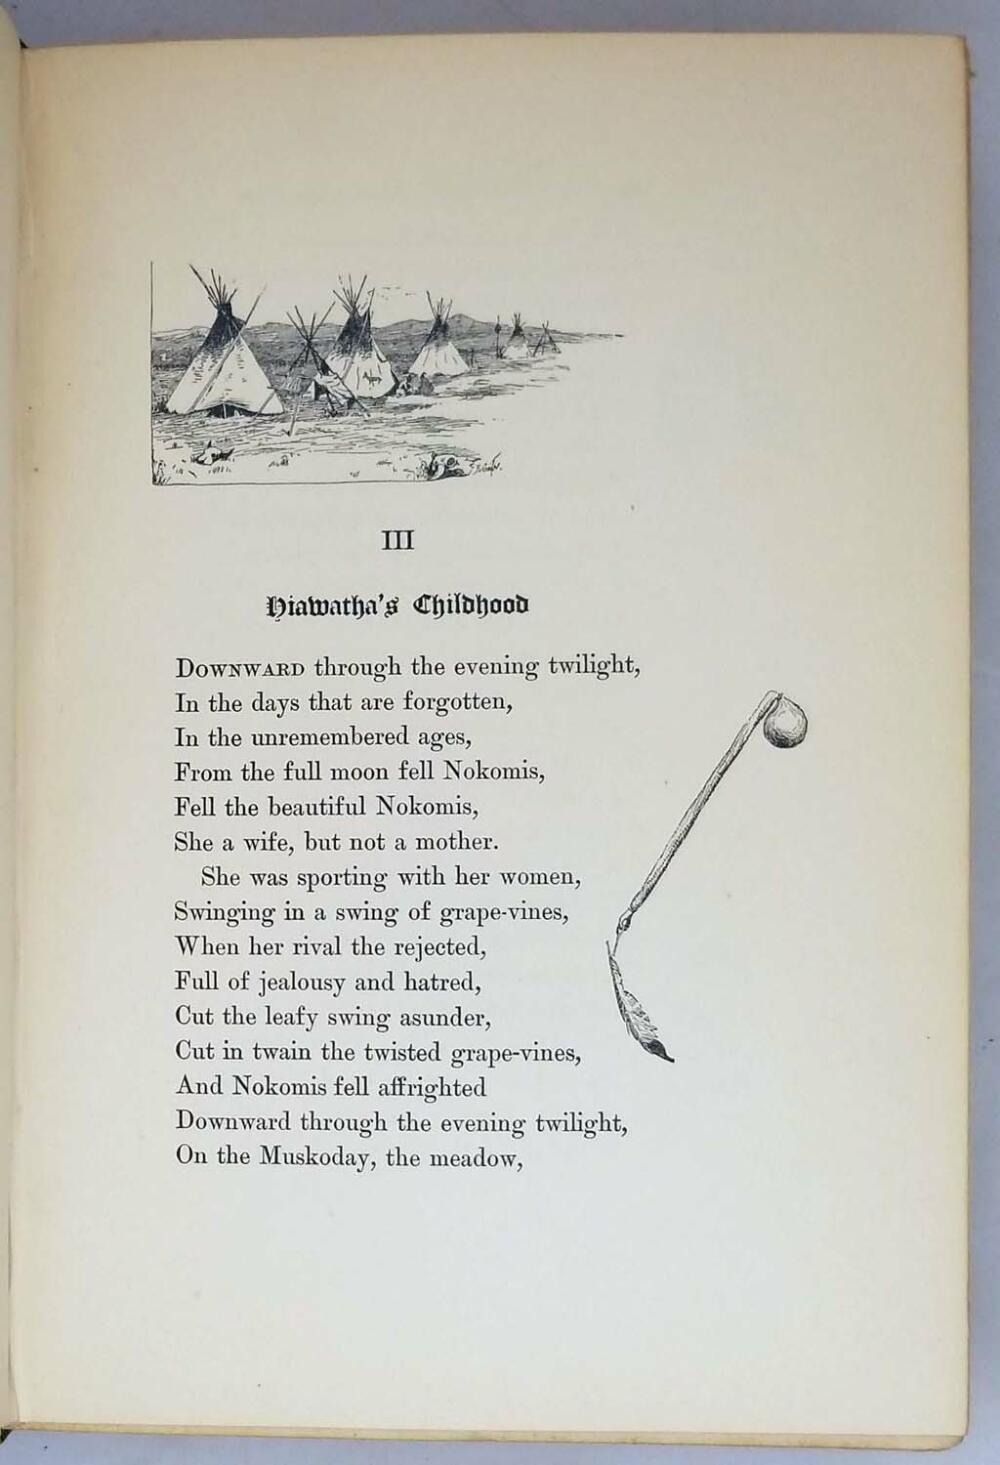 Song of Hiawatha - Henry Wadsworth Longfellow 1891 (Illus. Frederic Remington) | 1st Edition